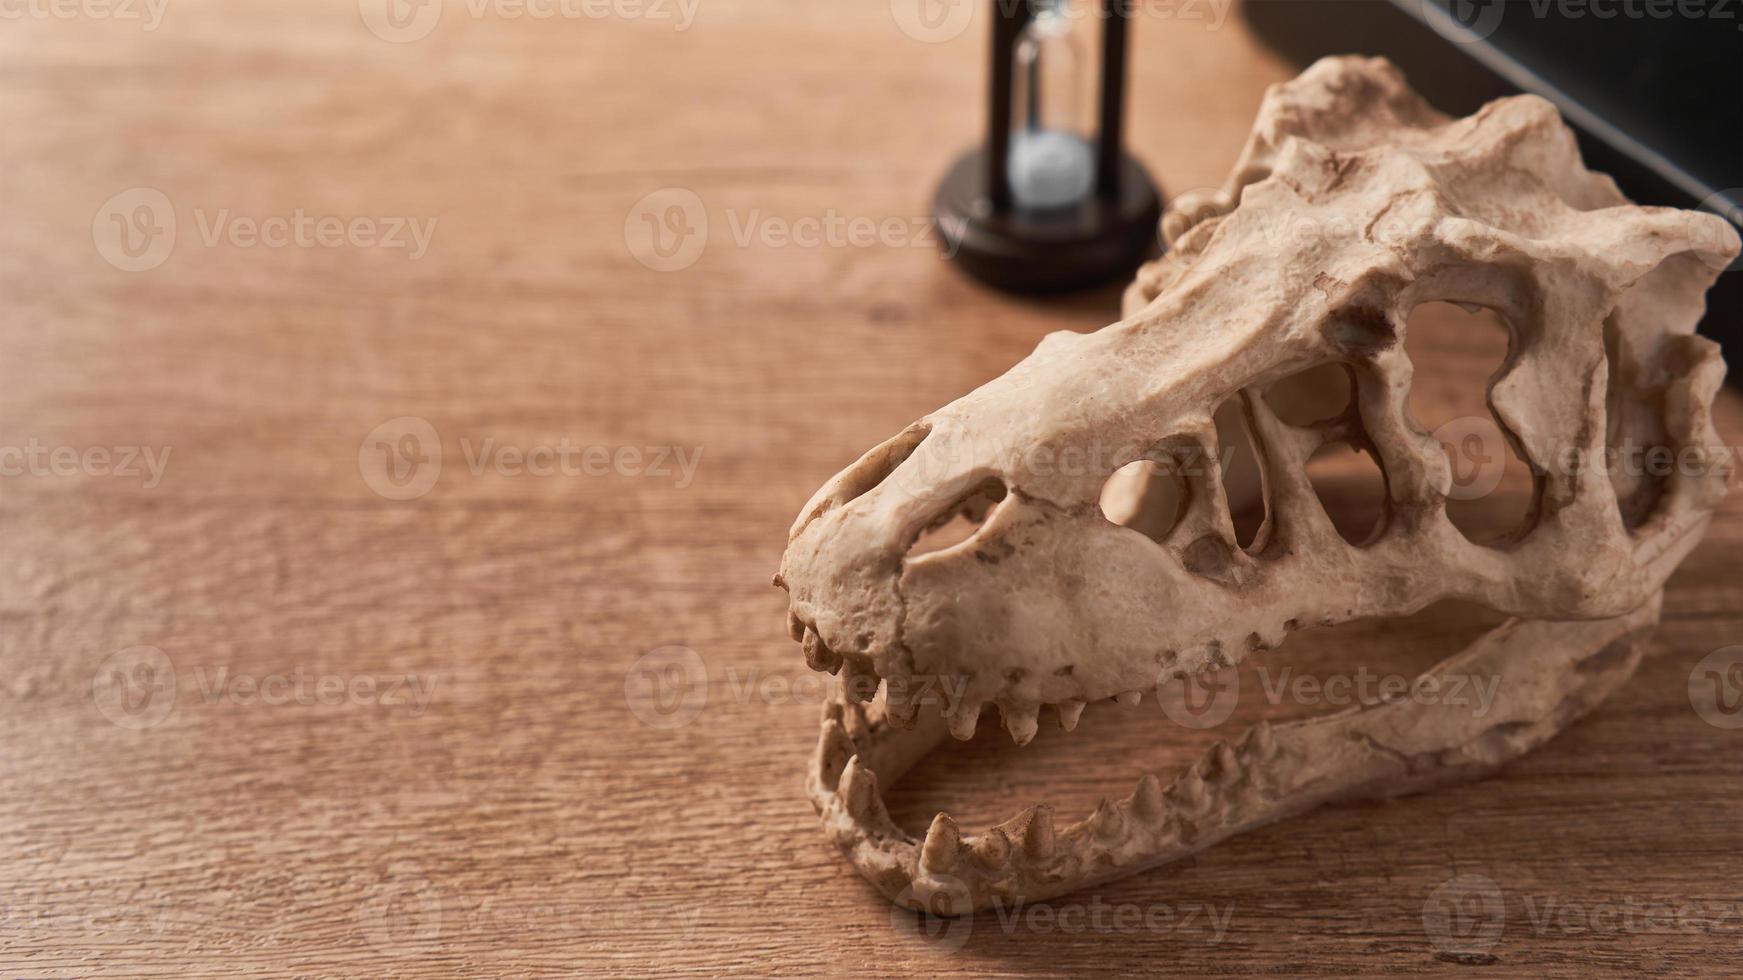 begrepp av paleontologi utbildning bakgrund. dinosaurie skalle på trä- tabell bakgrund foto